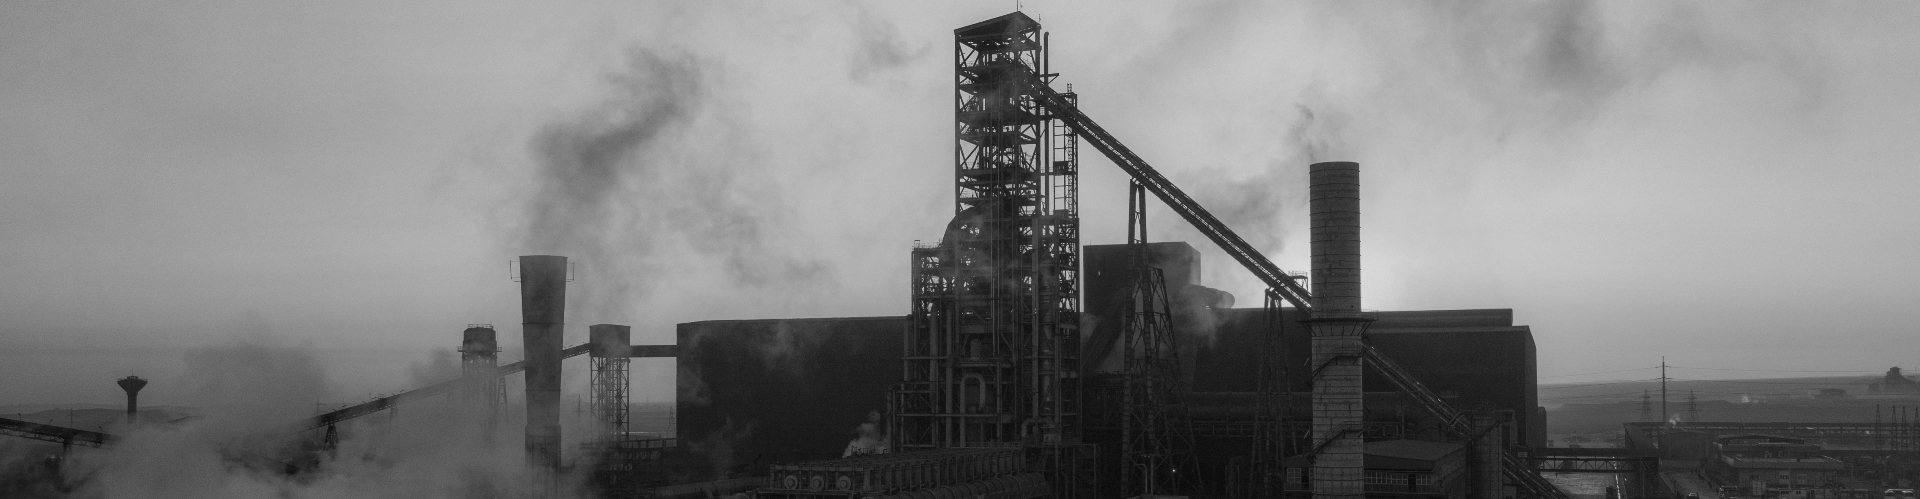 مجتمع صنعتی چادرملو | Chadormalu Industrial Complex